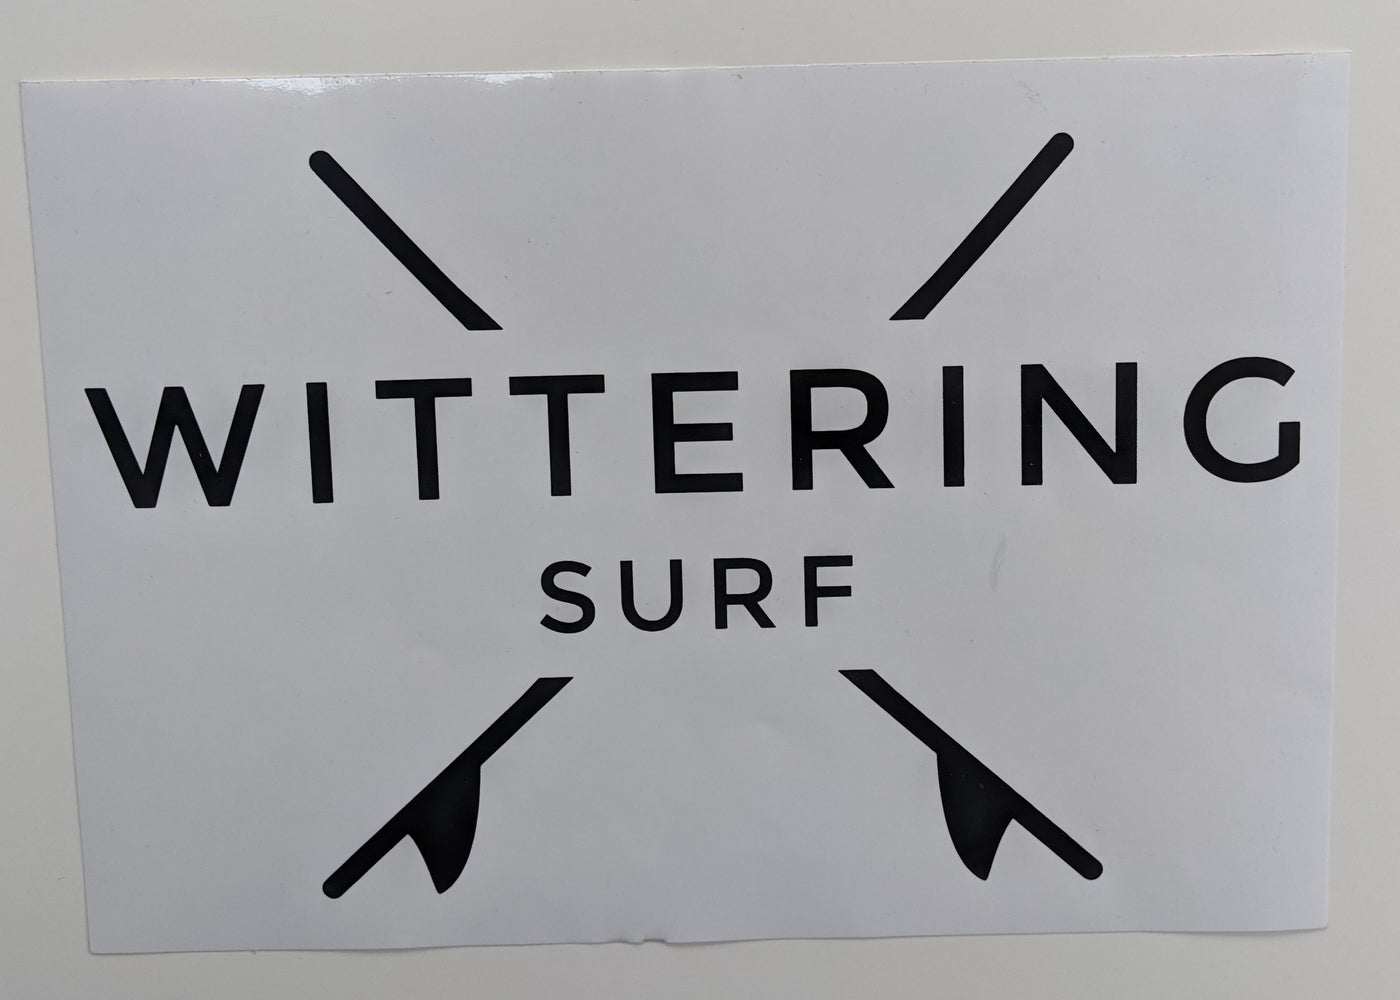 MEDIUM STICKER - Wittering Surf Shop